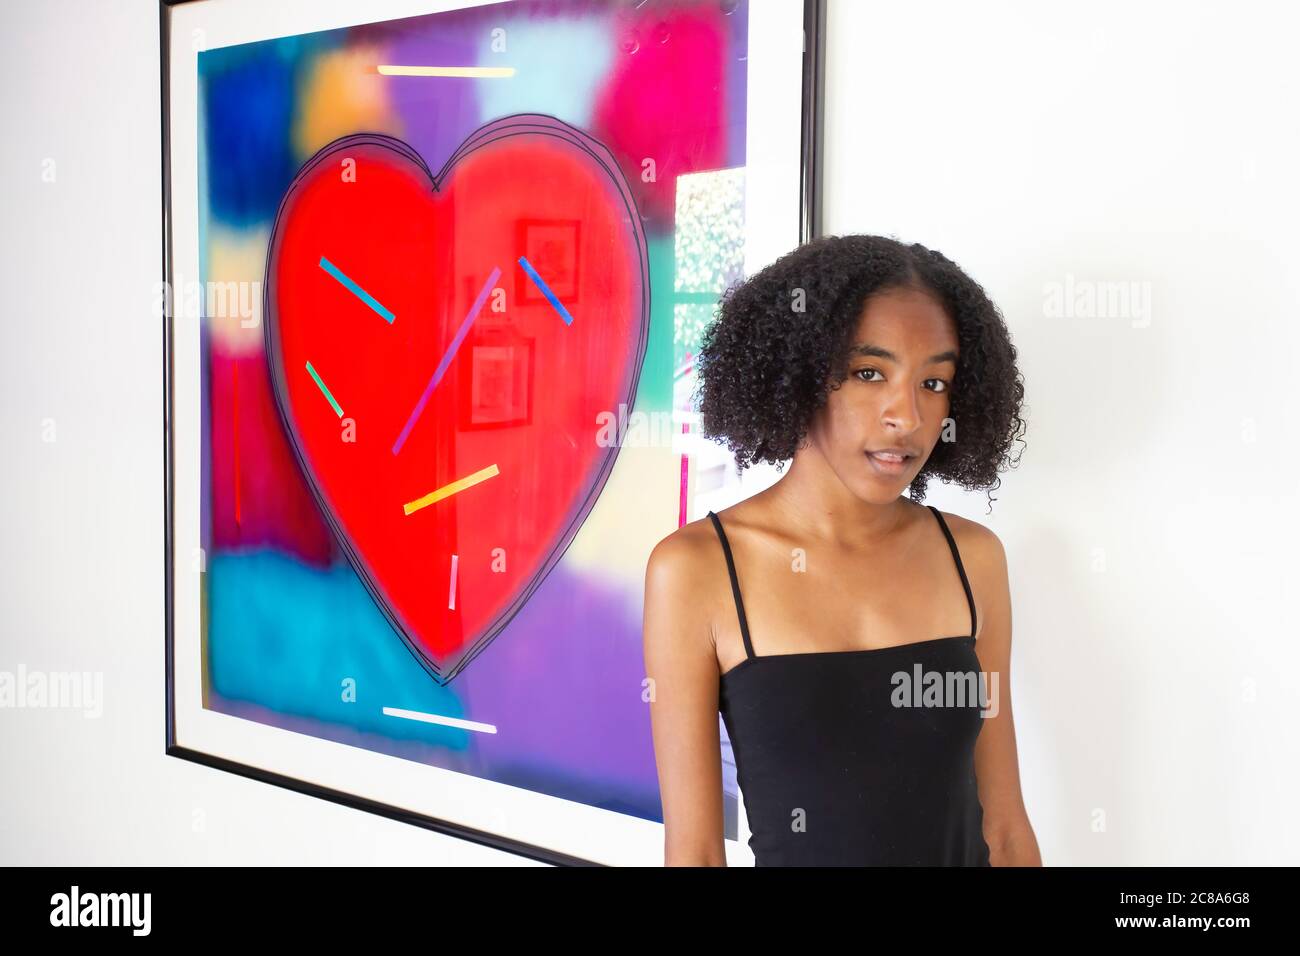 Teenage Black Girl Model Stock Photo